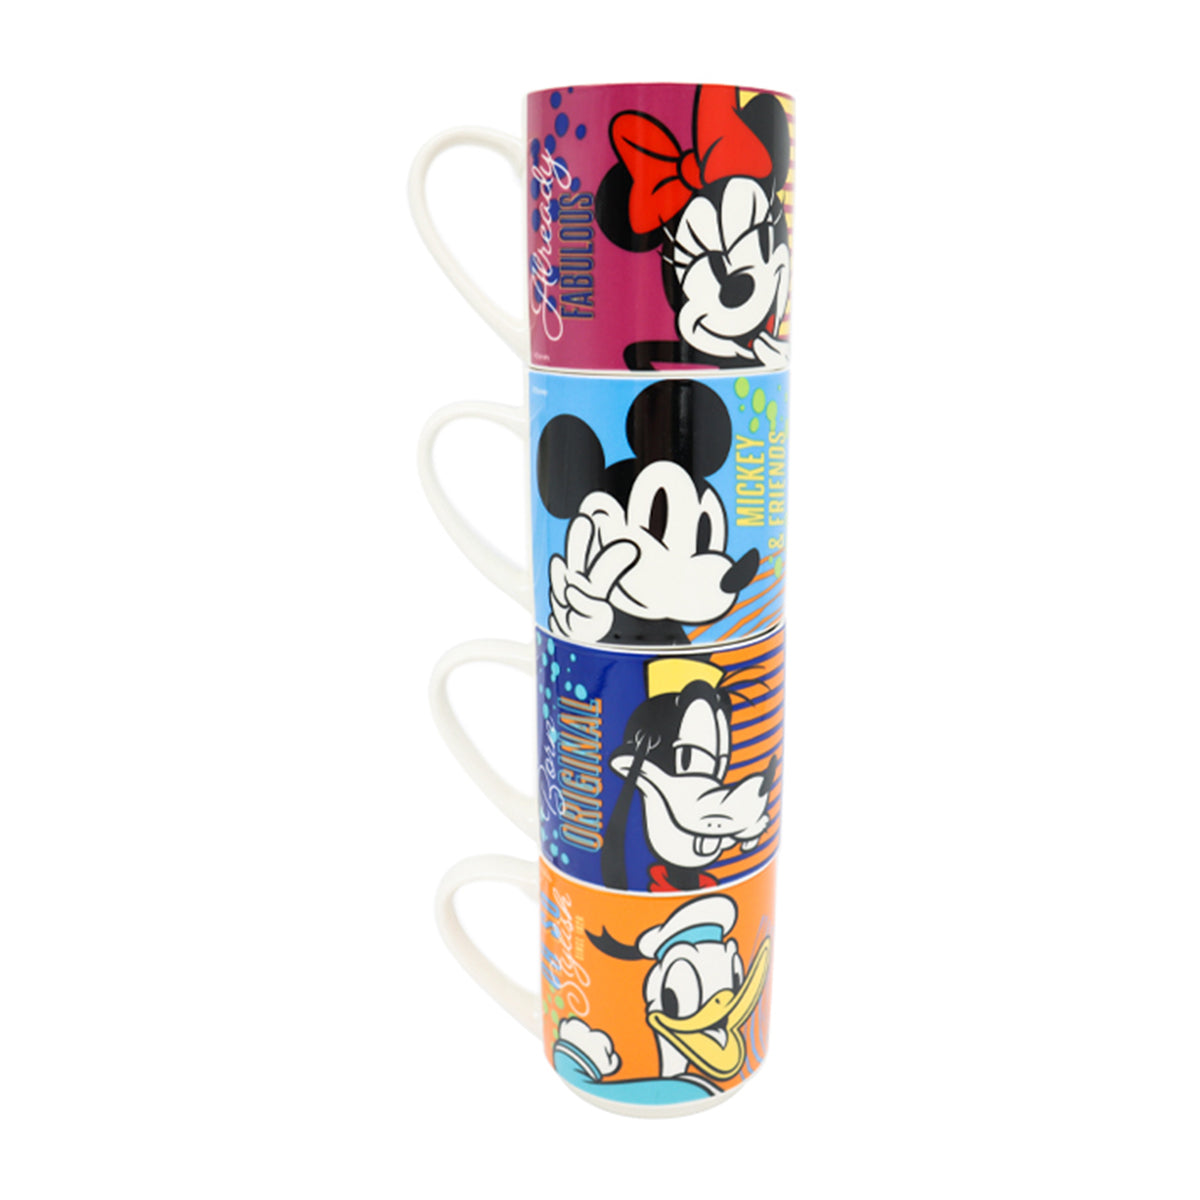 Fun Kids Tarro Apilable:  Disney - Mickey and Minnie 4 Pack